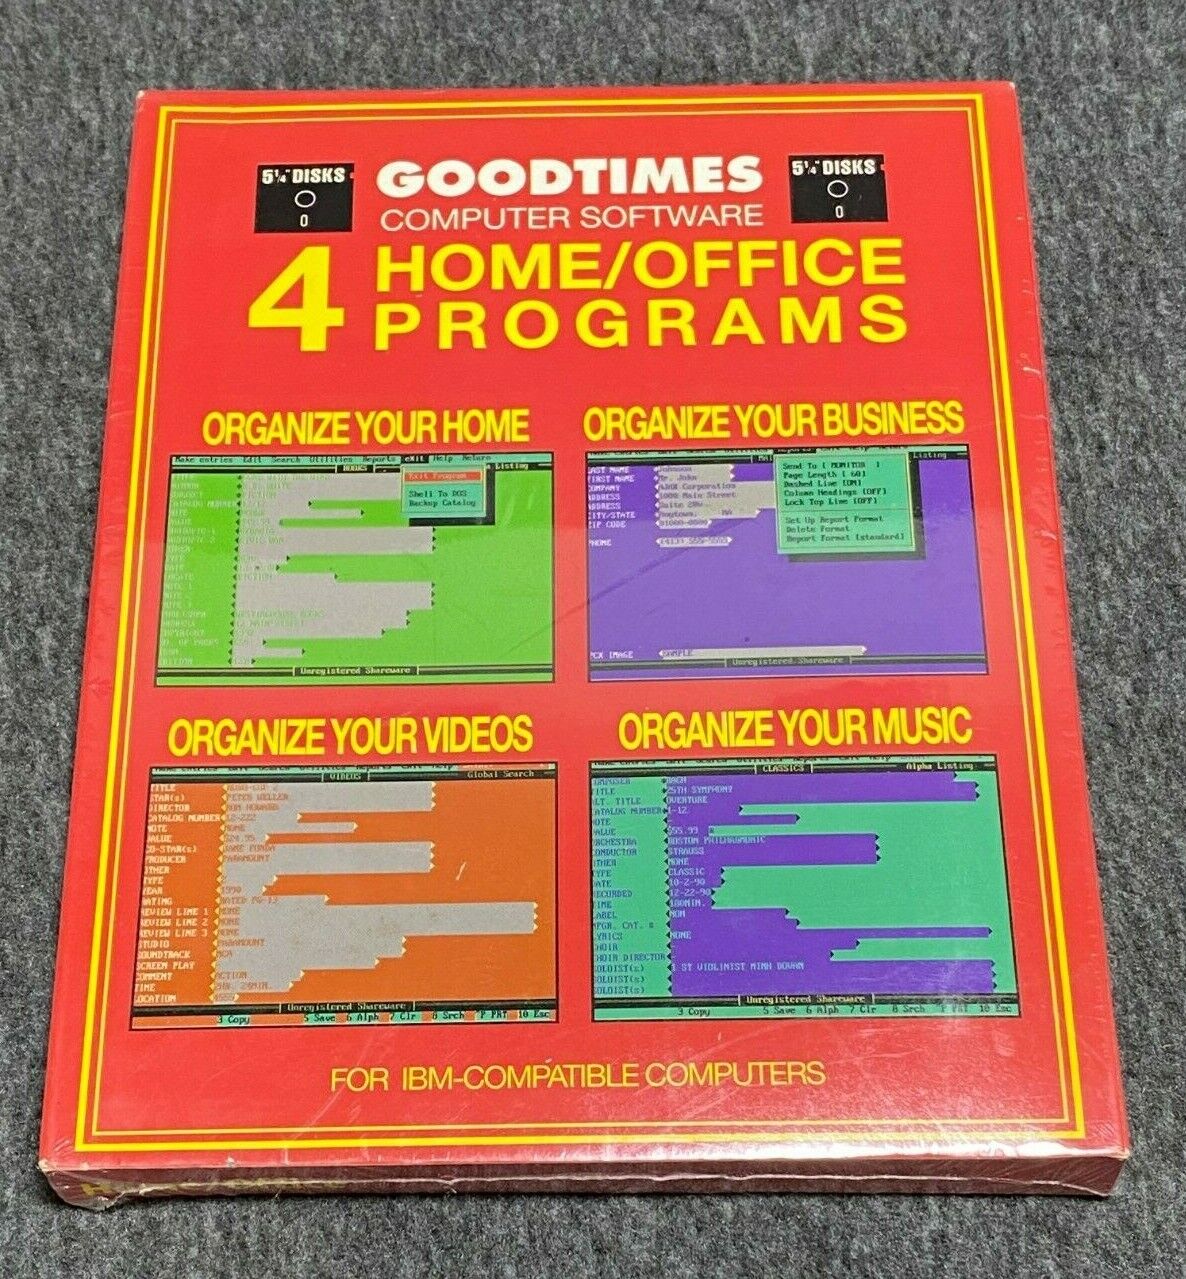 NIB sealed VTG Goodtimes Computer Software 4 Home Office Programs - 5.25 IBM